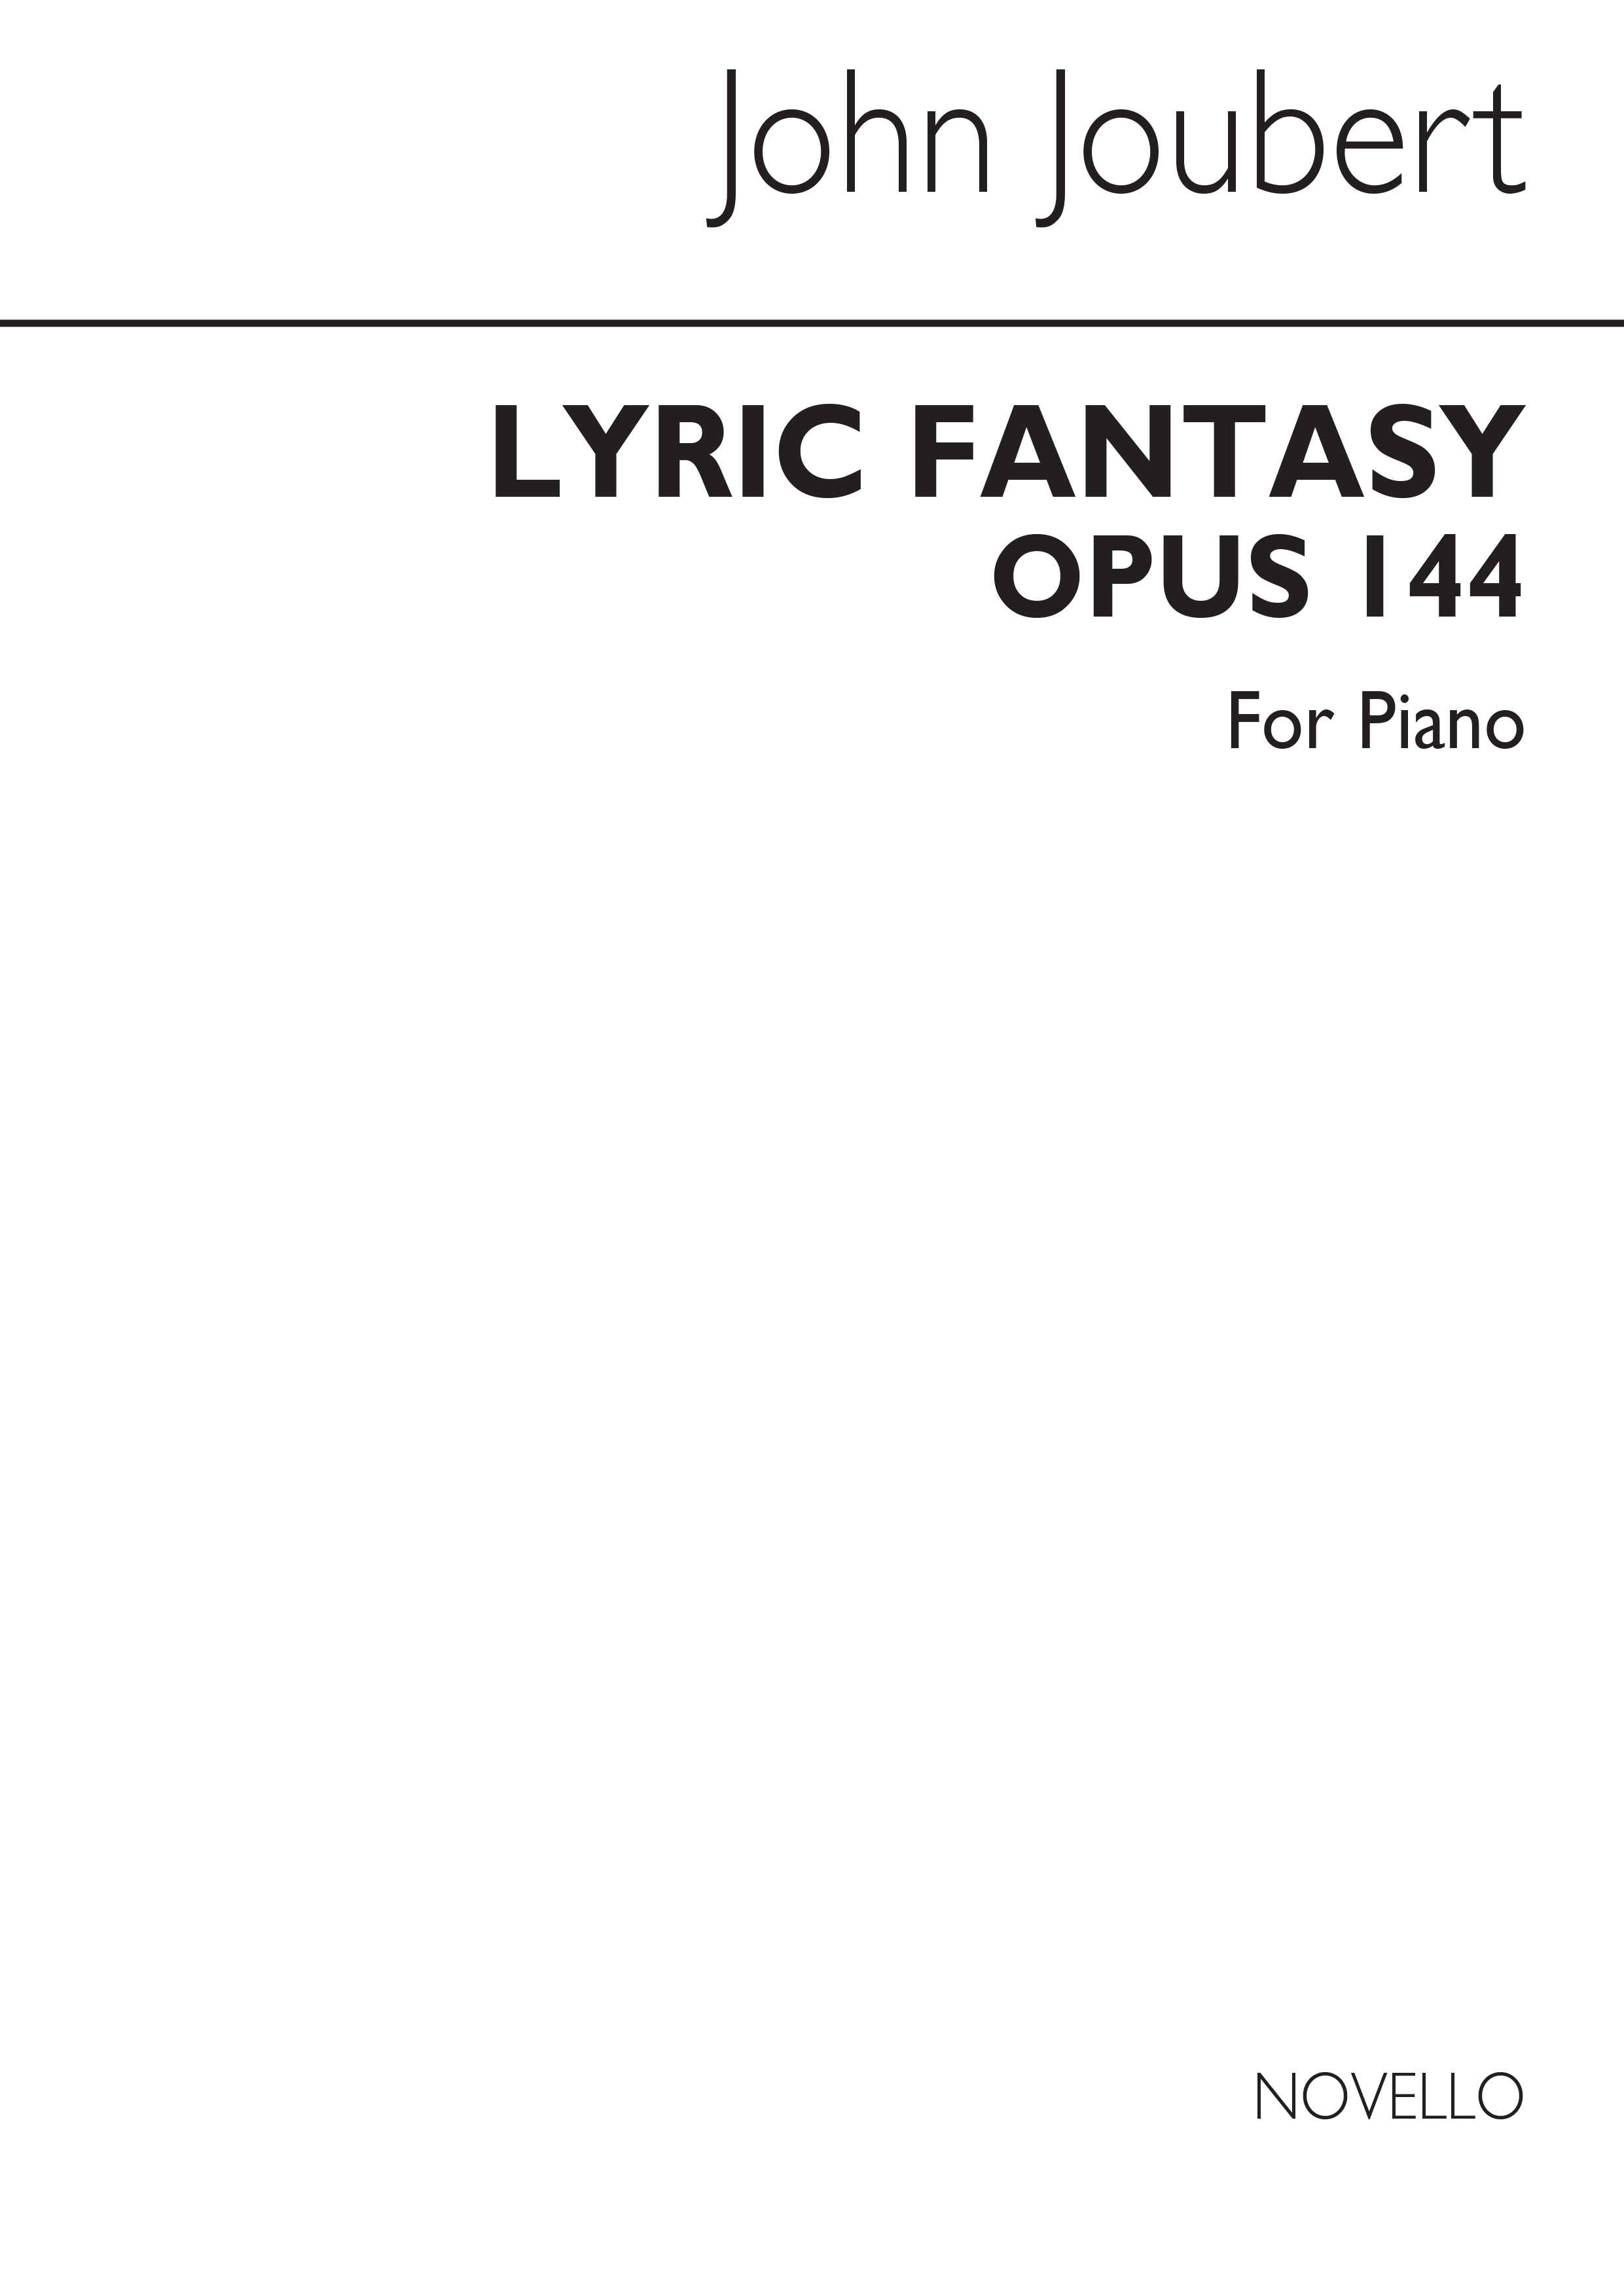 Joubert: Lyric Fantasy Op.144 for Piano